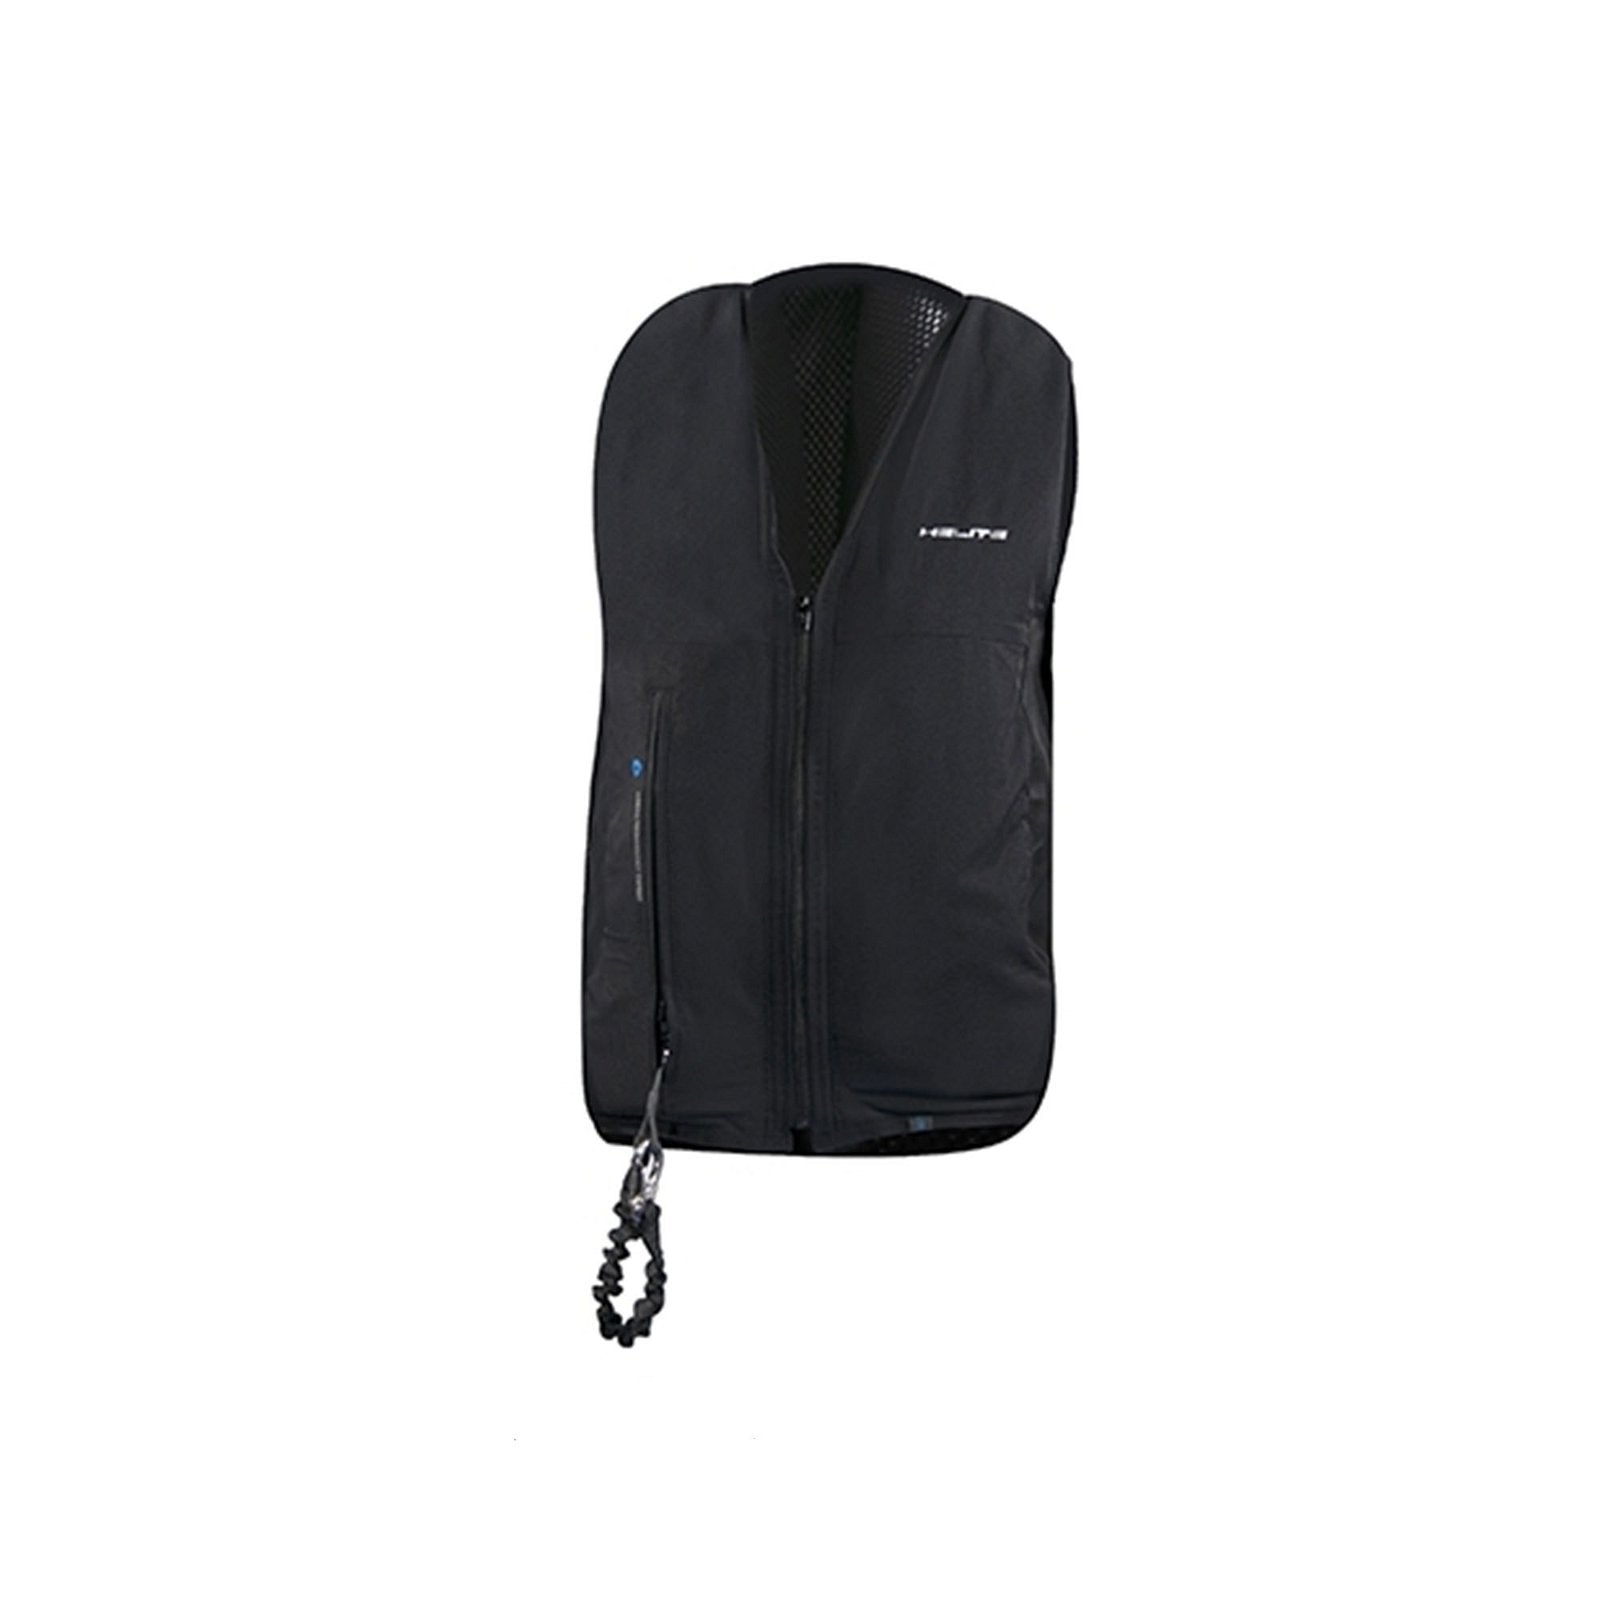 Zip In 2 Airbag - Black – Trolle Company